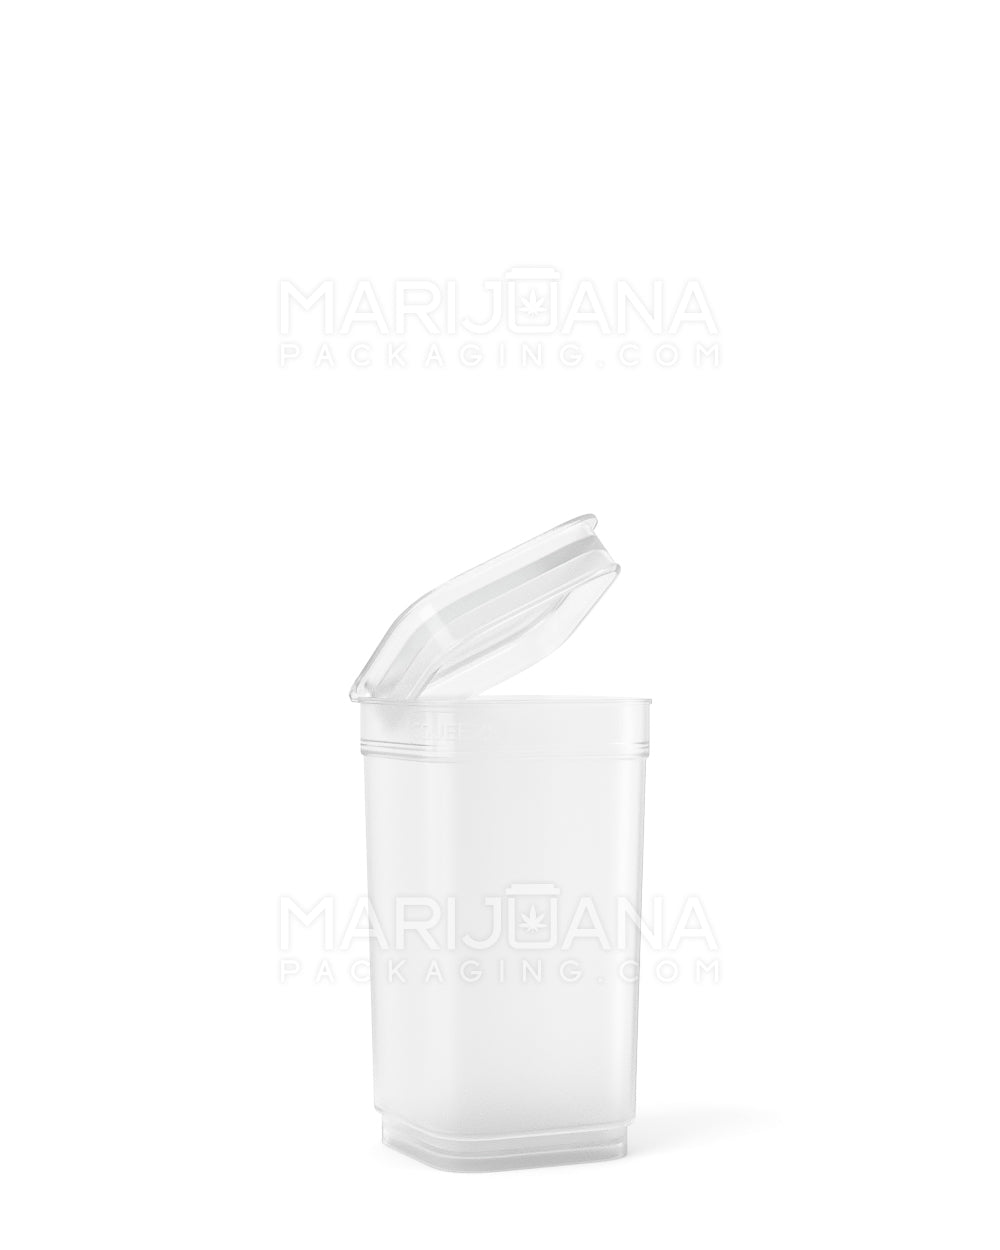 POLLEN GEAR | Child Resistant 100% Recyclable Transparent Clear Pop Box Pop Top Bottles | 20dr - 3.5g - 590 Count